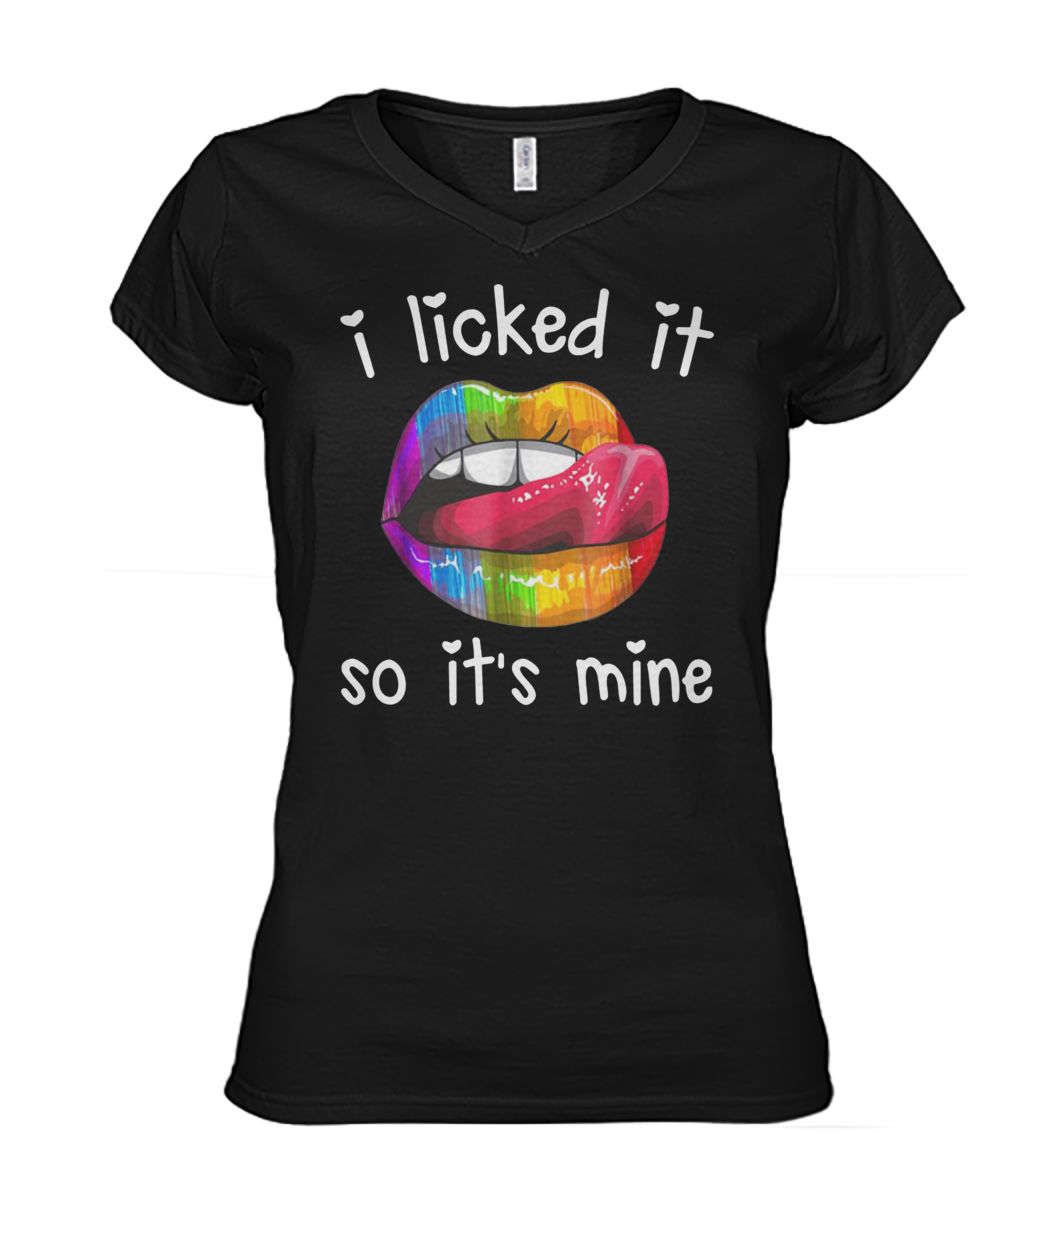 I licked it so it's mine LGBT women's v-neck